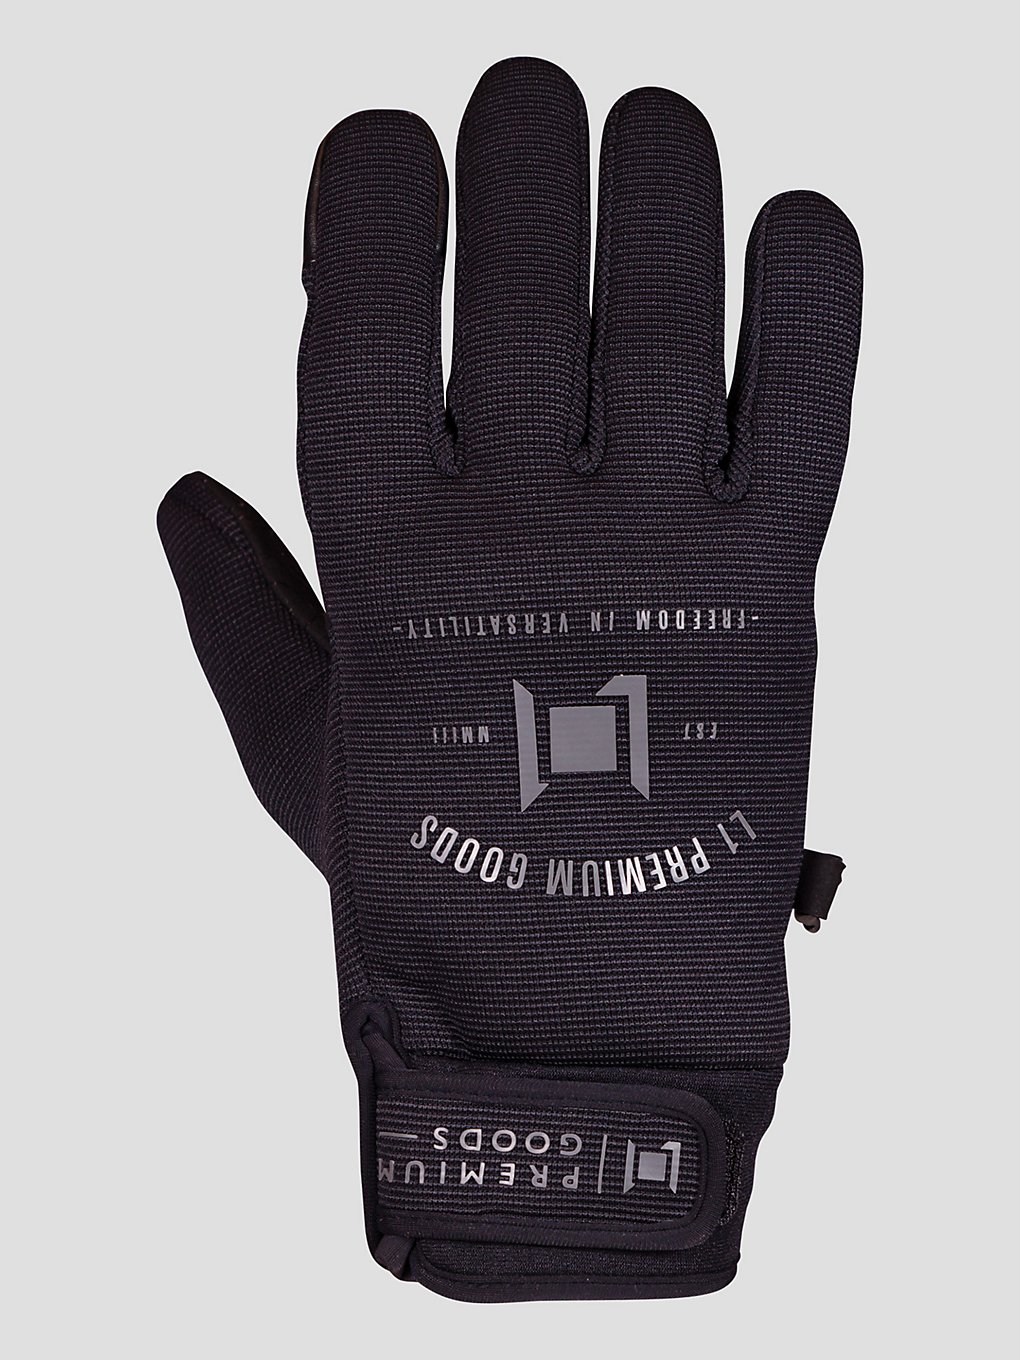 L1 Rima Handschuhe black kaufen